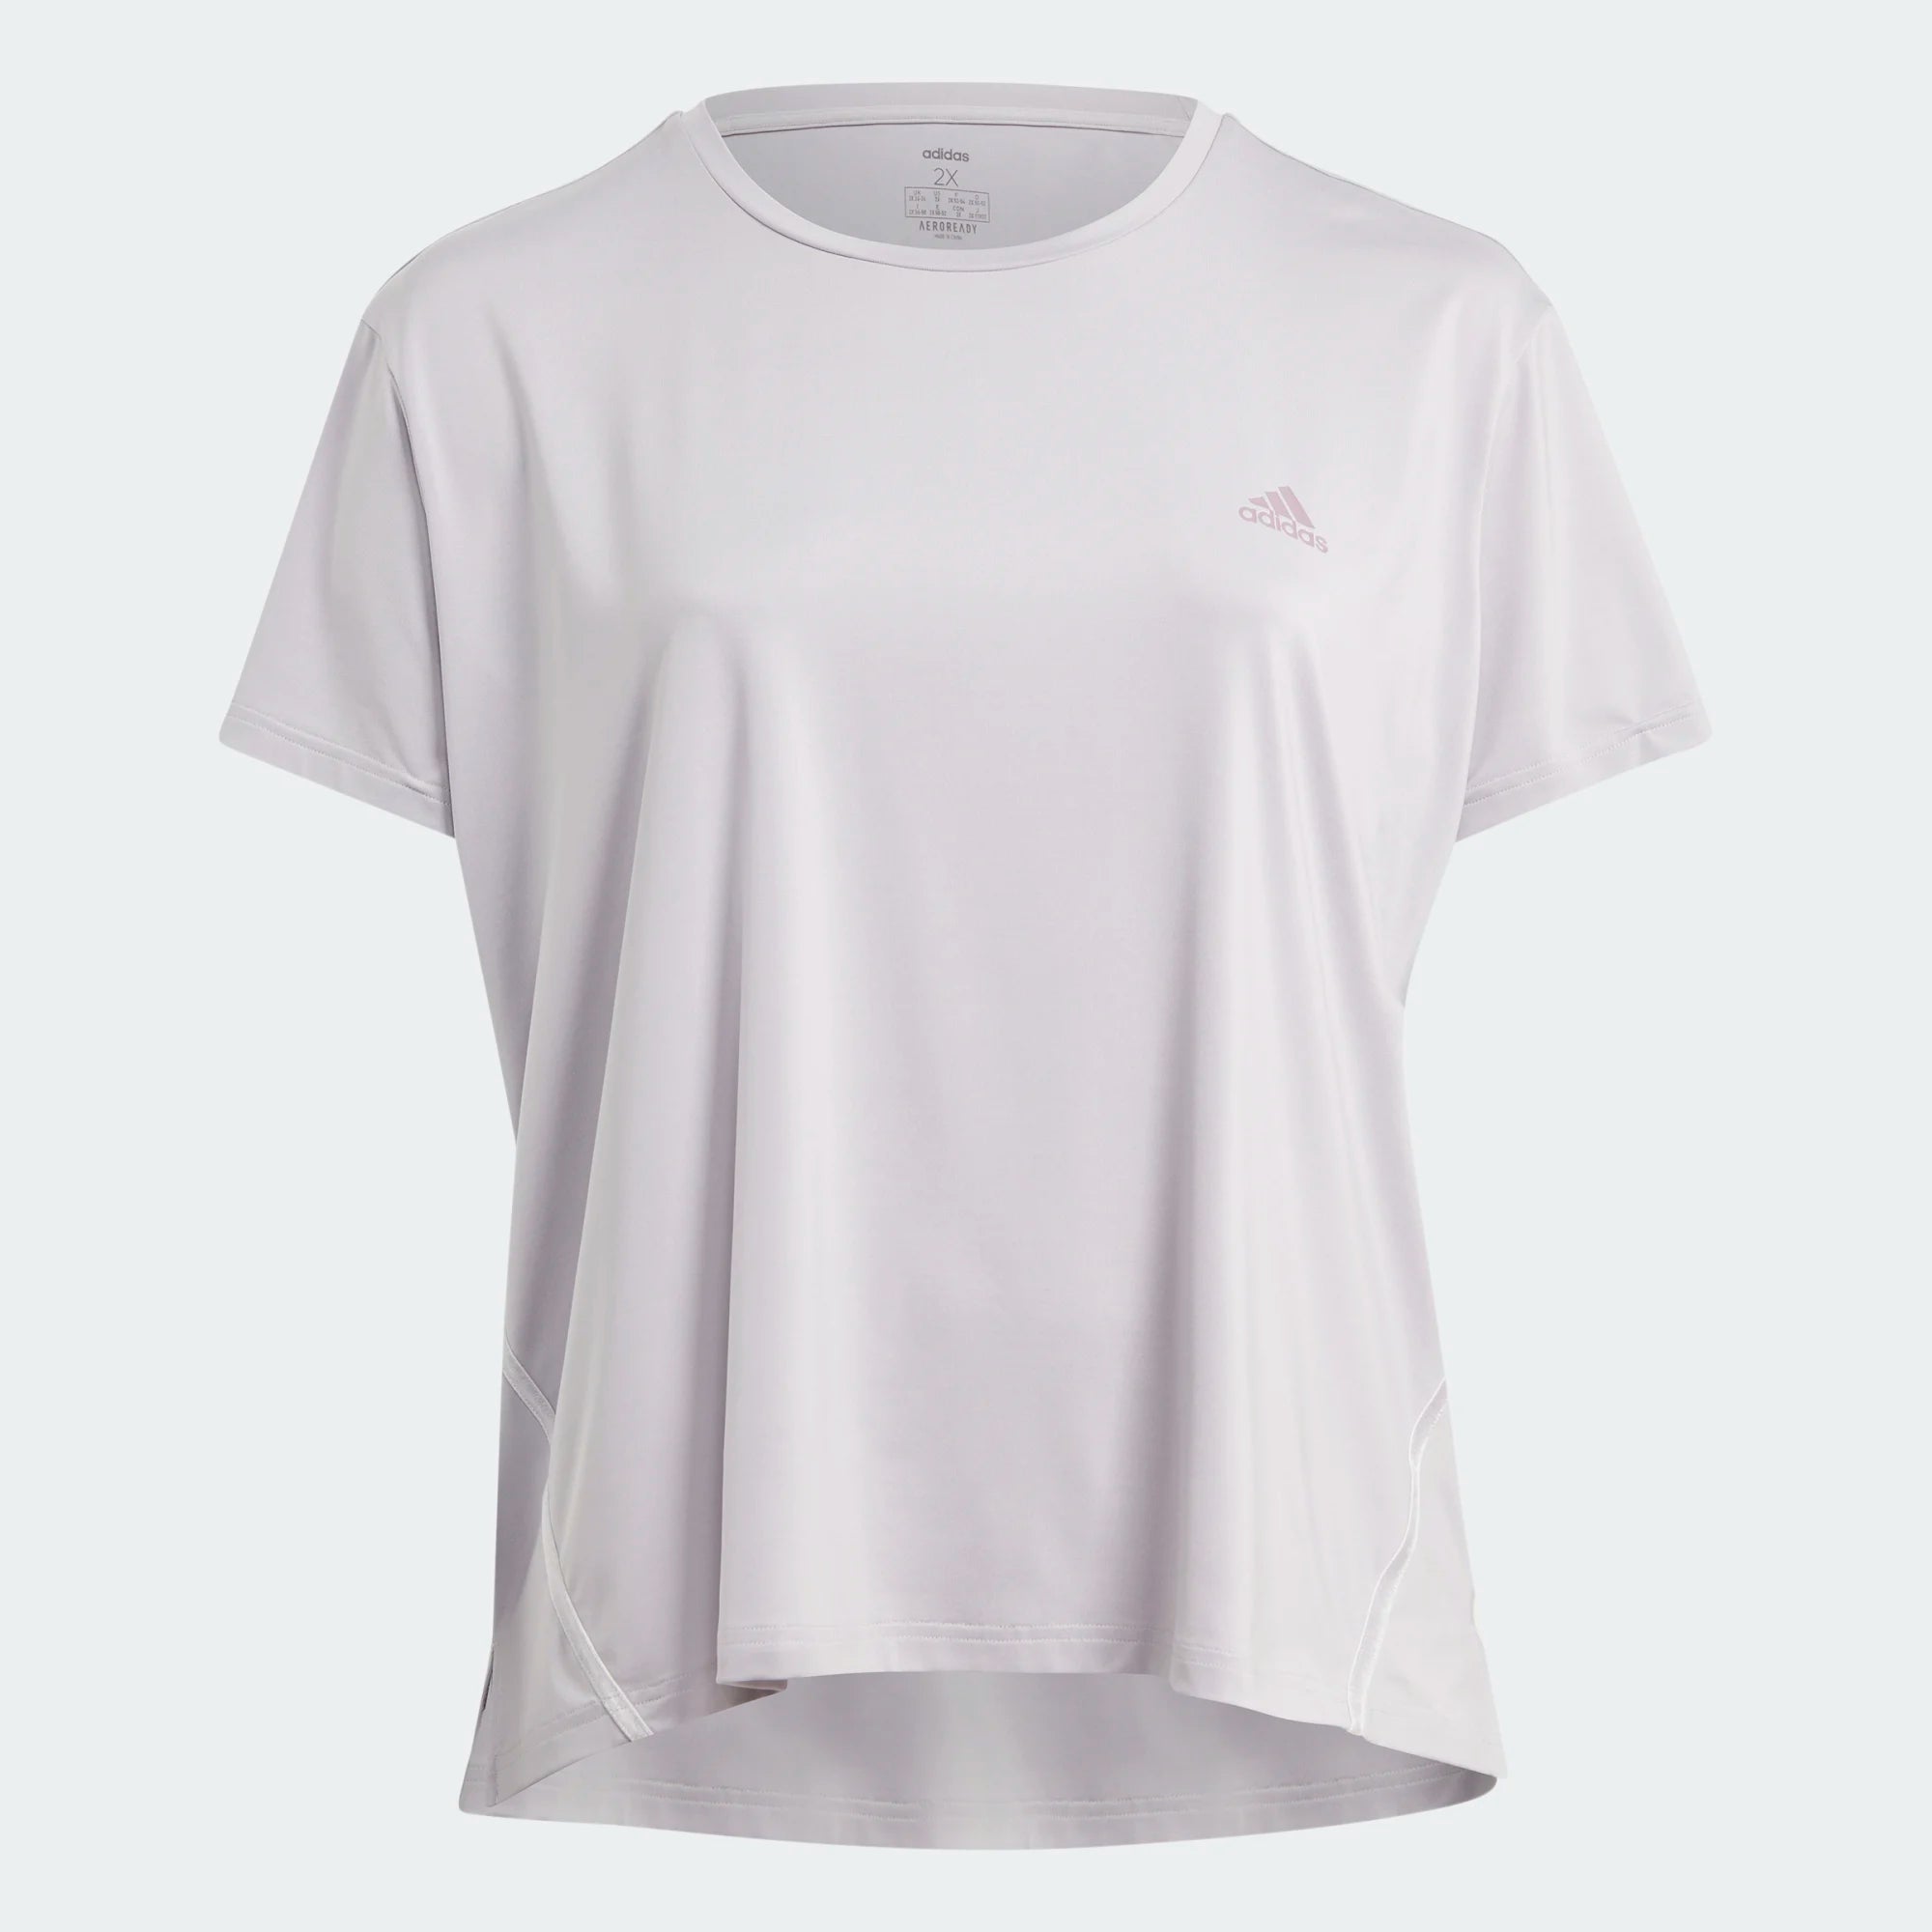 tradesports.co.uk Adidas Women's Glam-On T-Shirt Plus Size GD4917